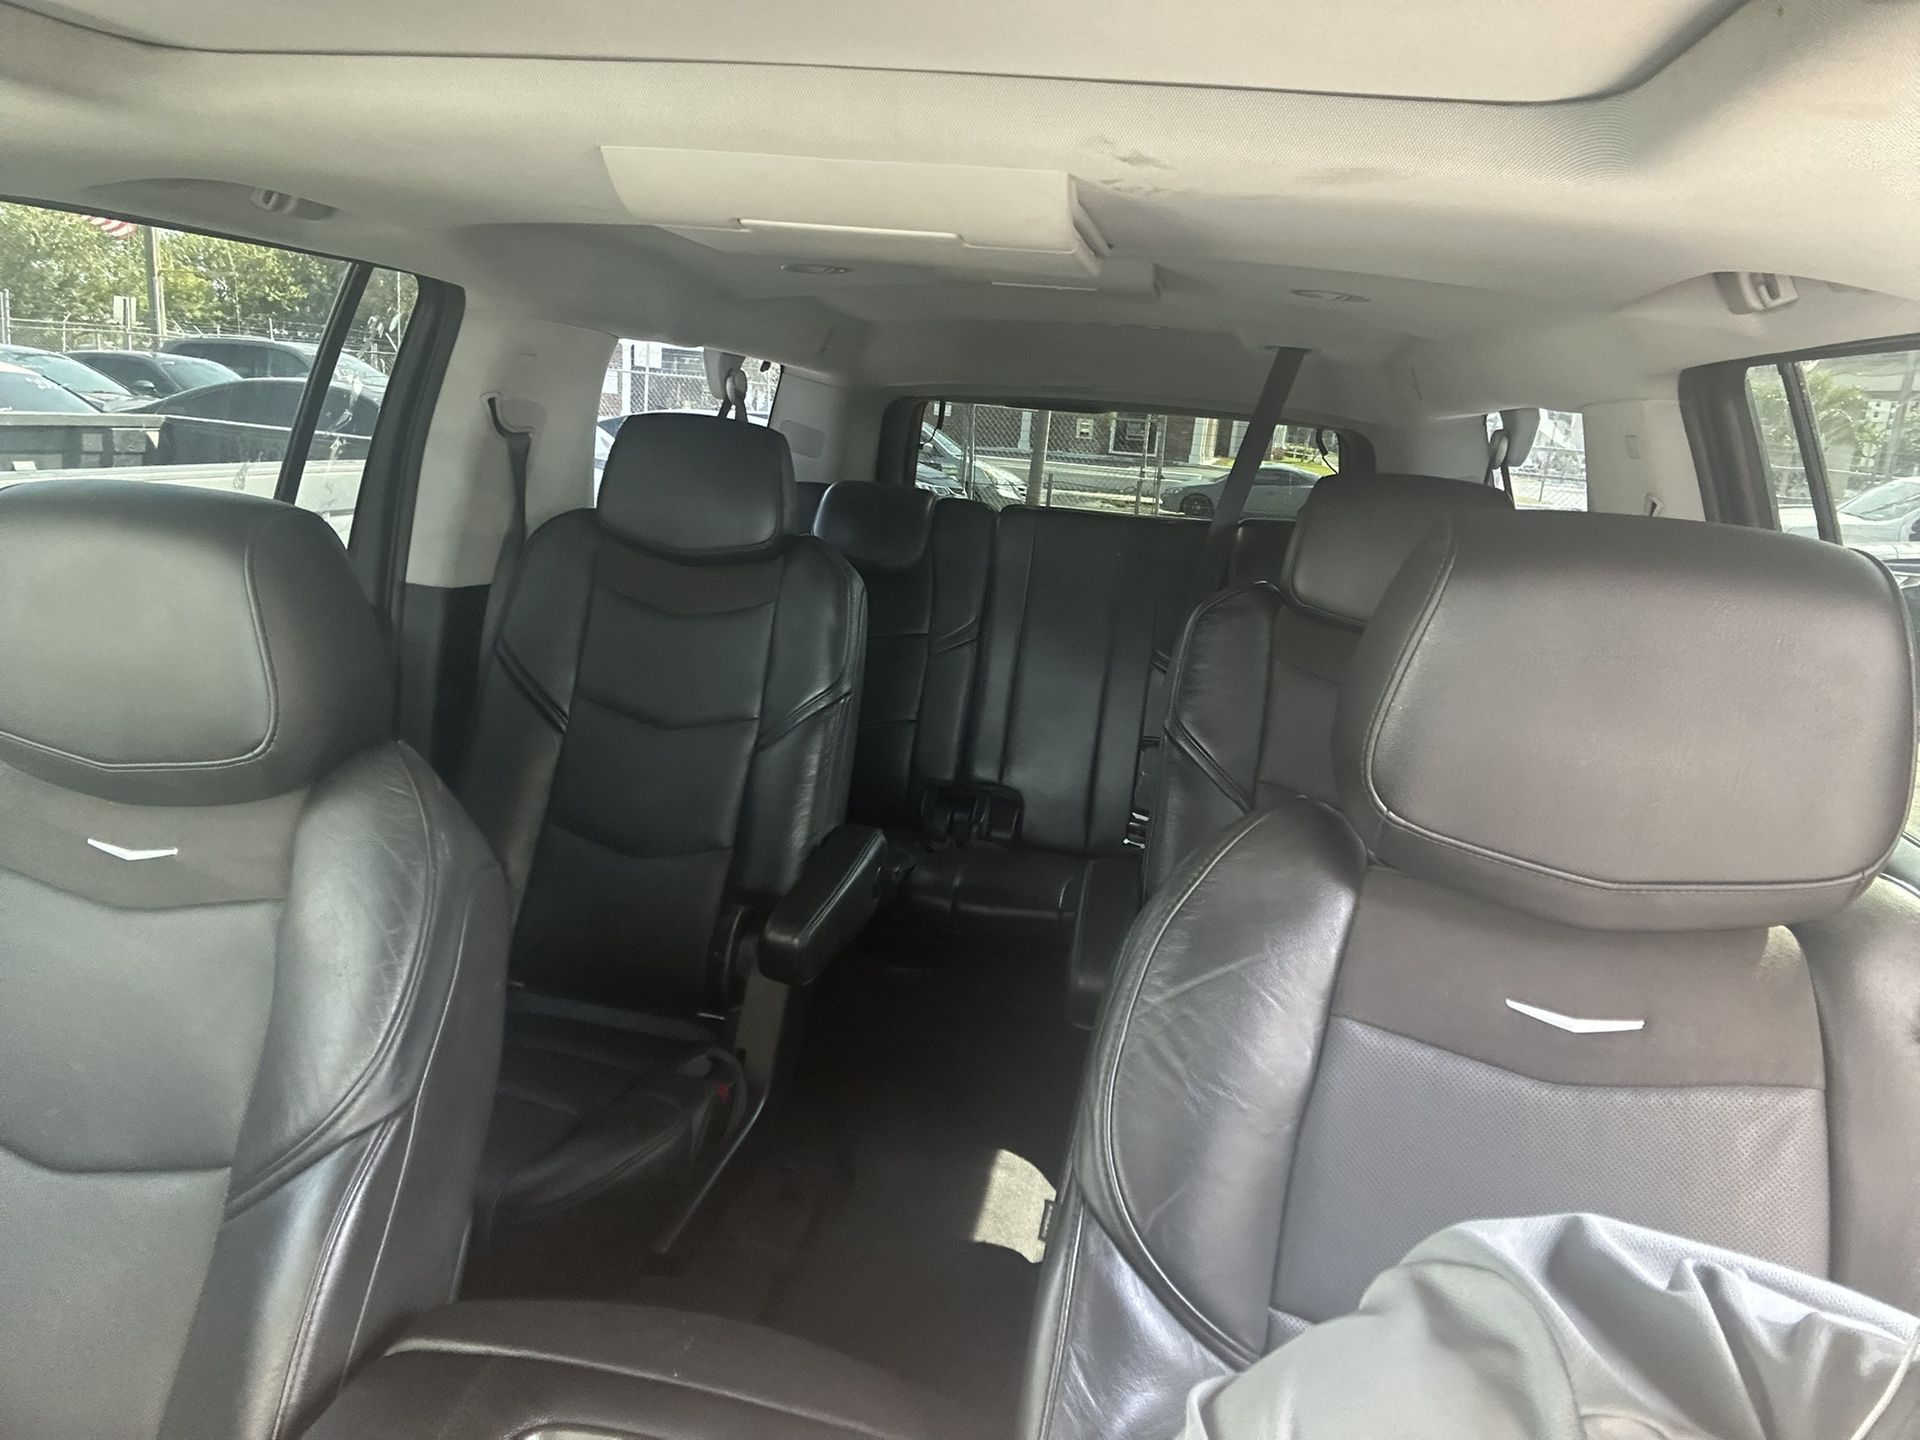 used 2016 Cadillac Escalade XL - interior view 3